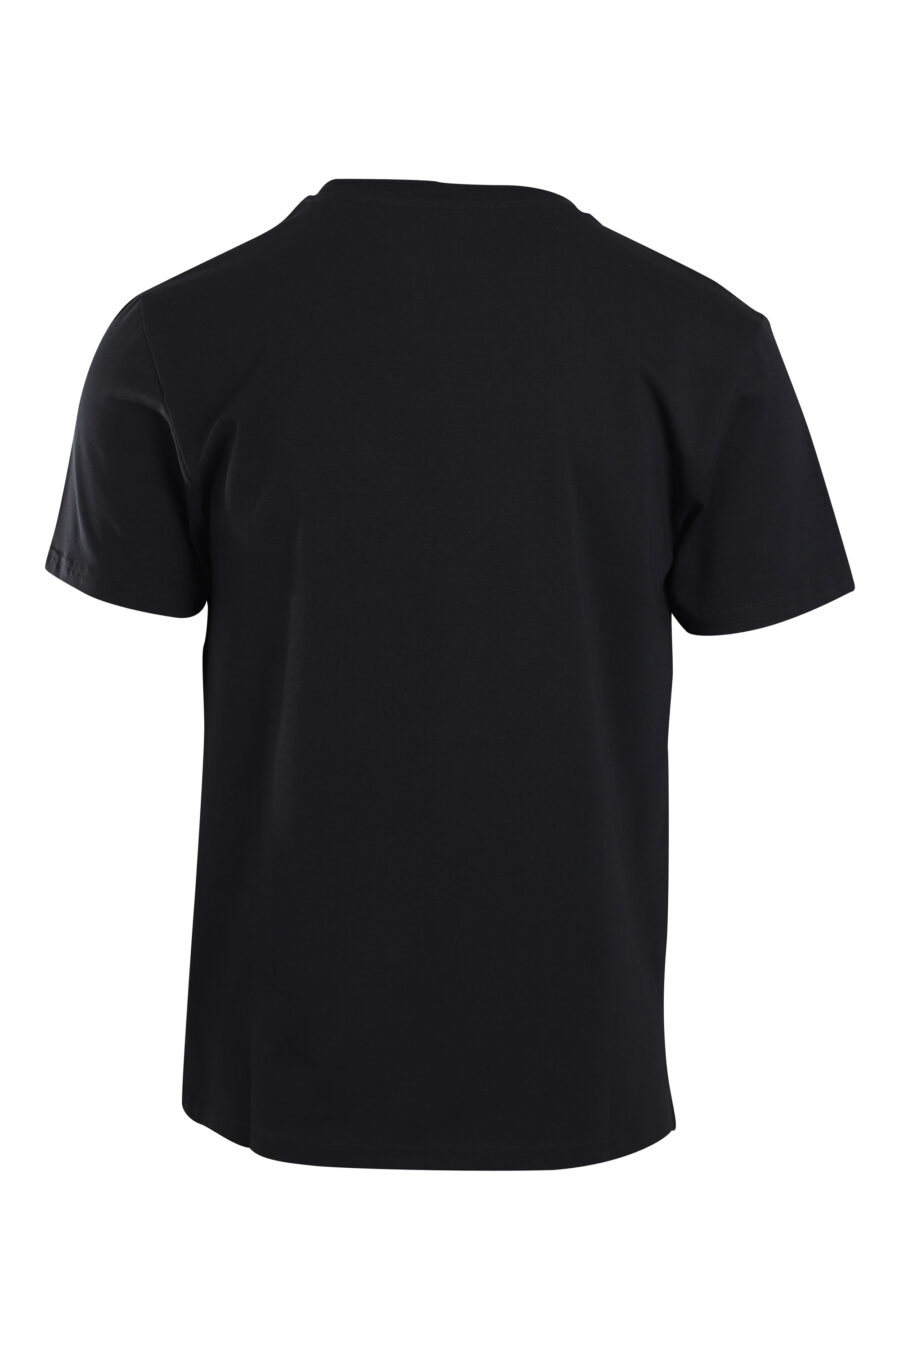 T-shirt preta com mini logótipo "swim" - IMG 2184